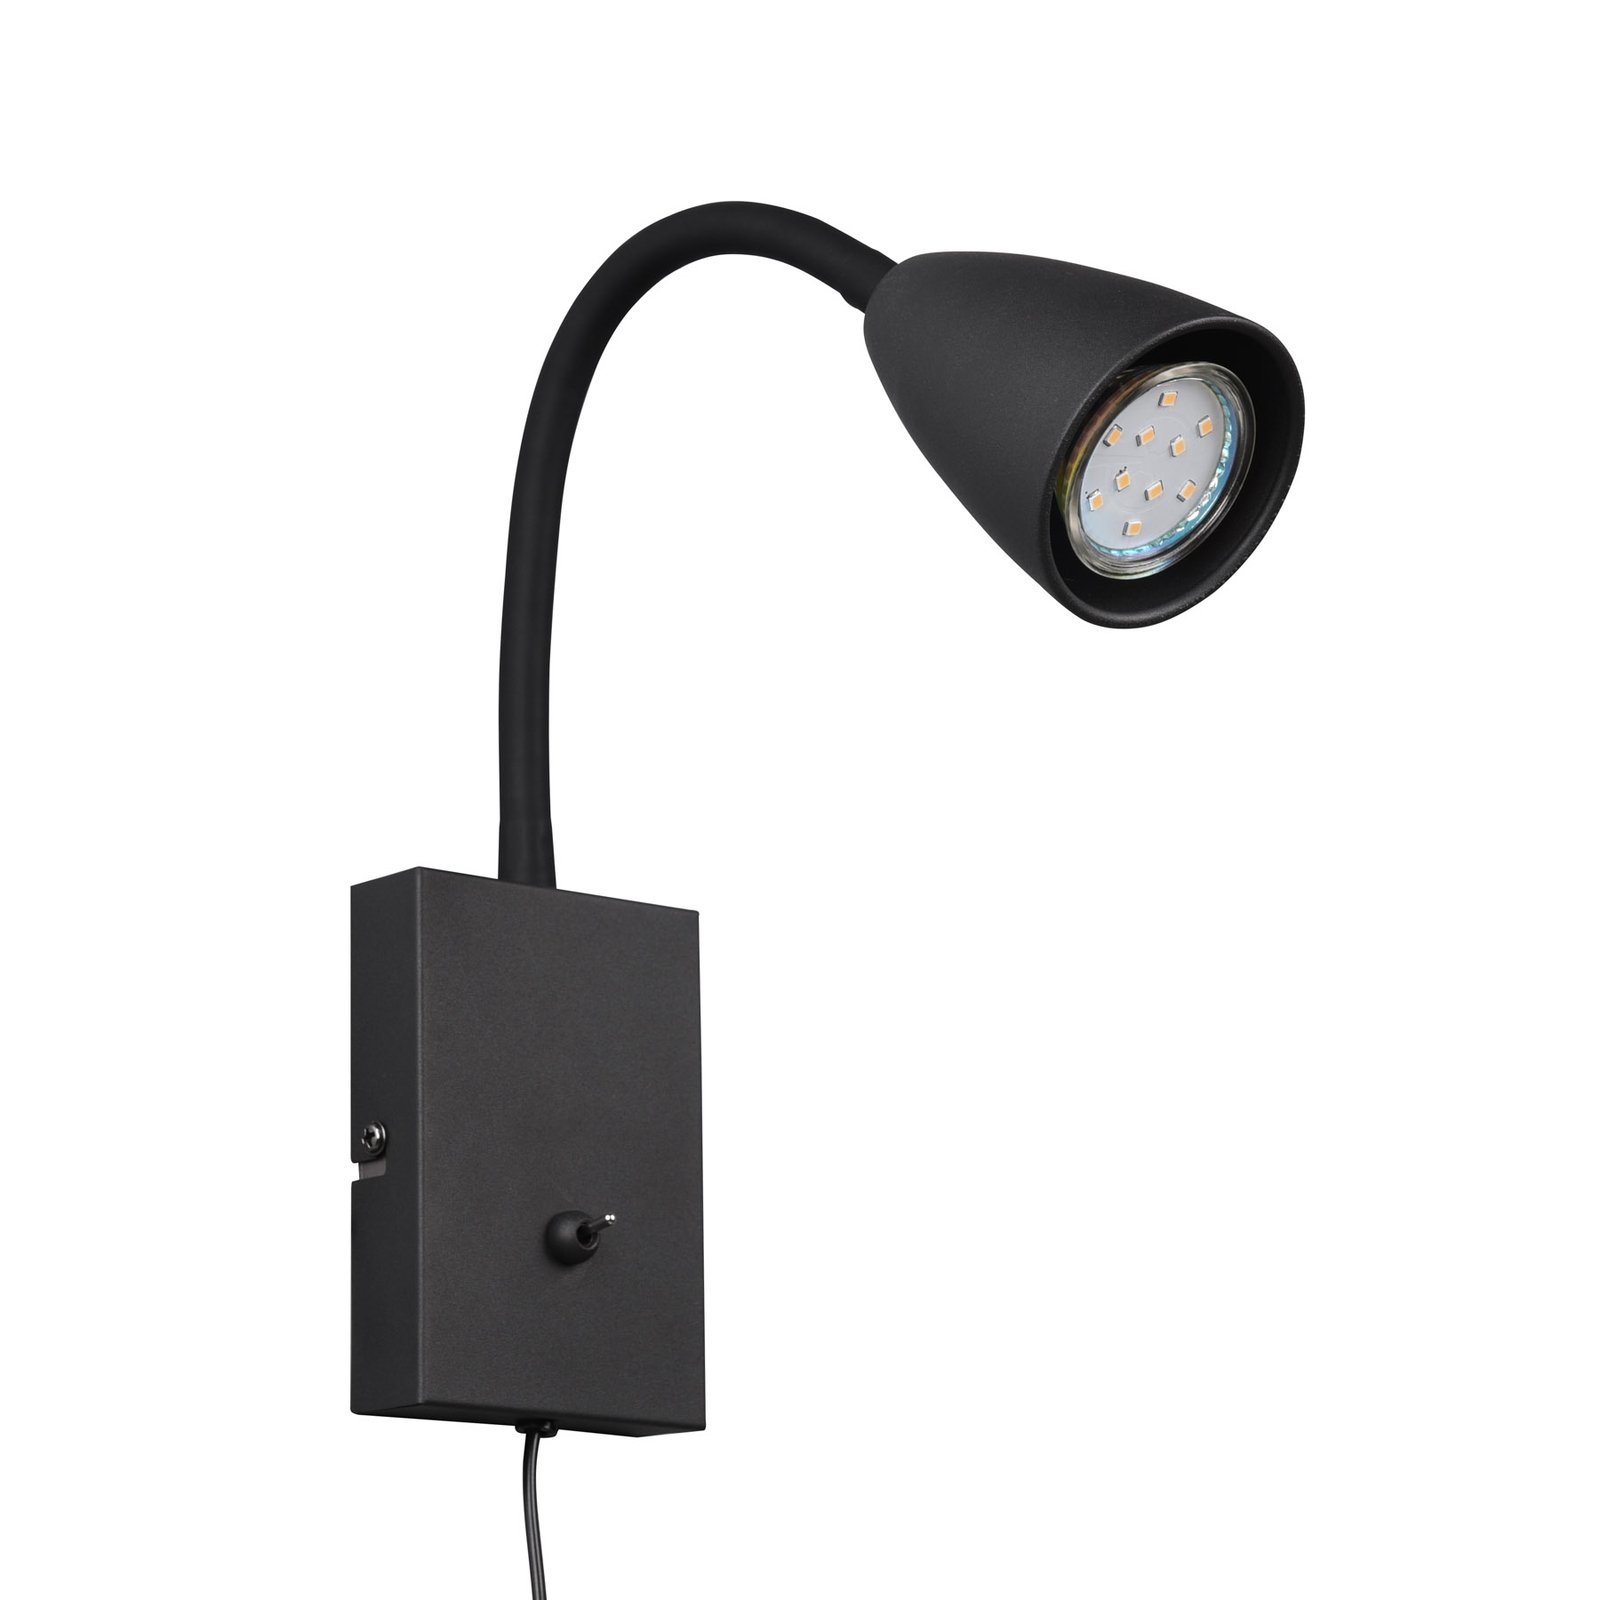 Wanda wall light with plug, matt black